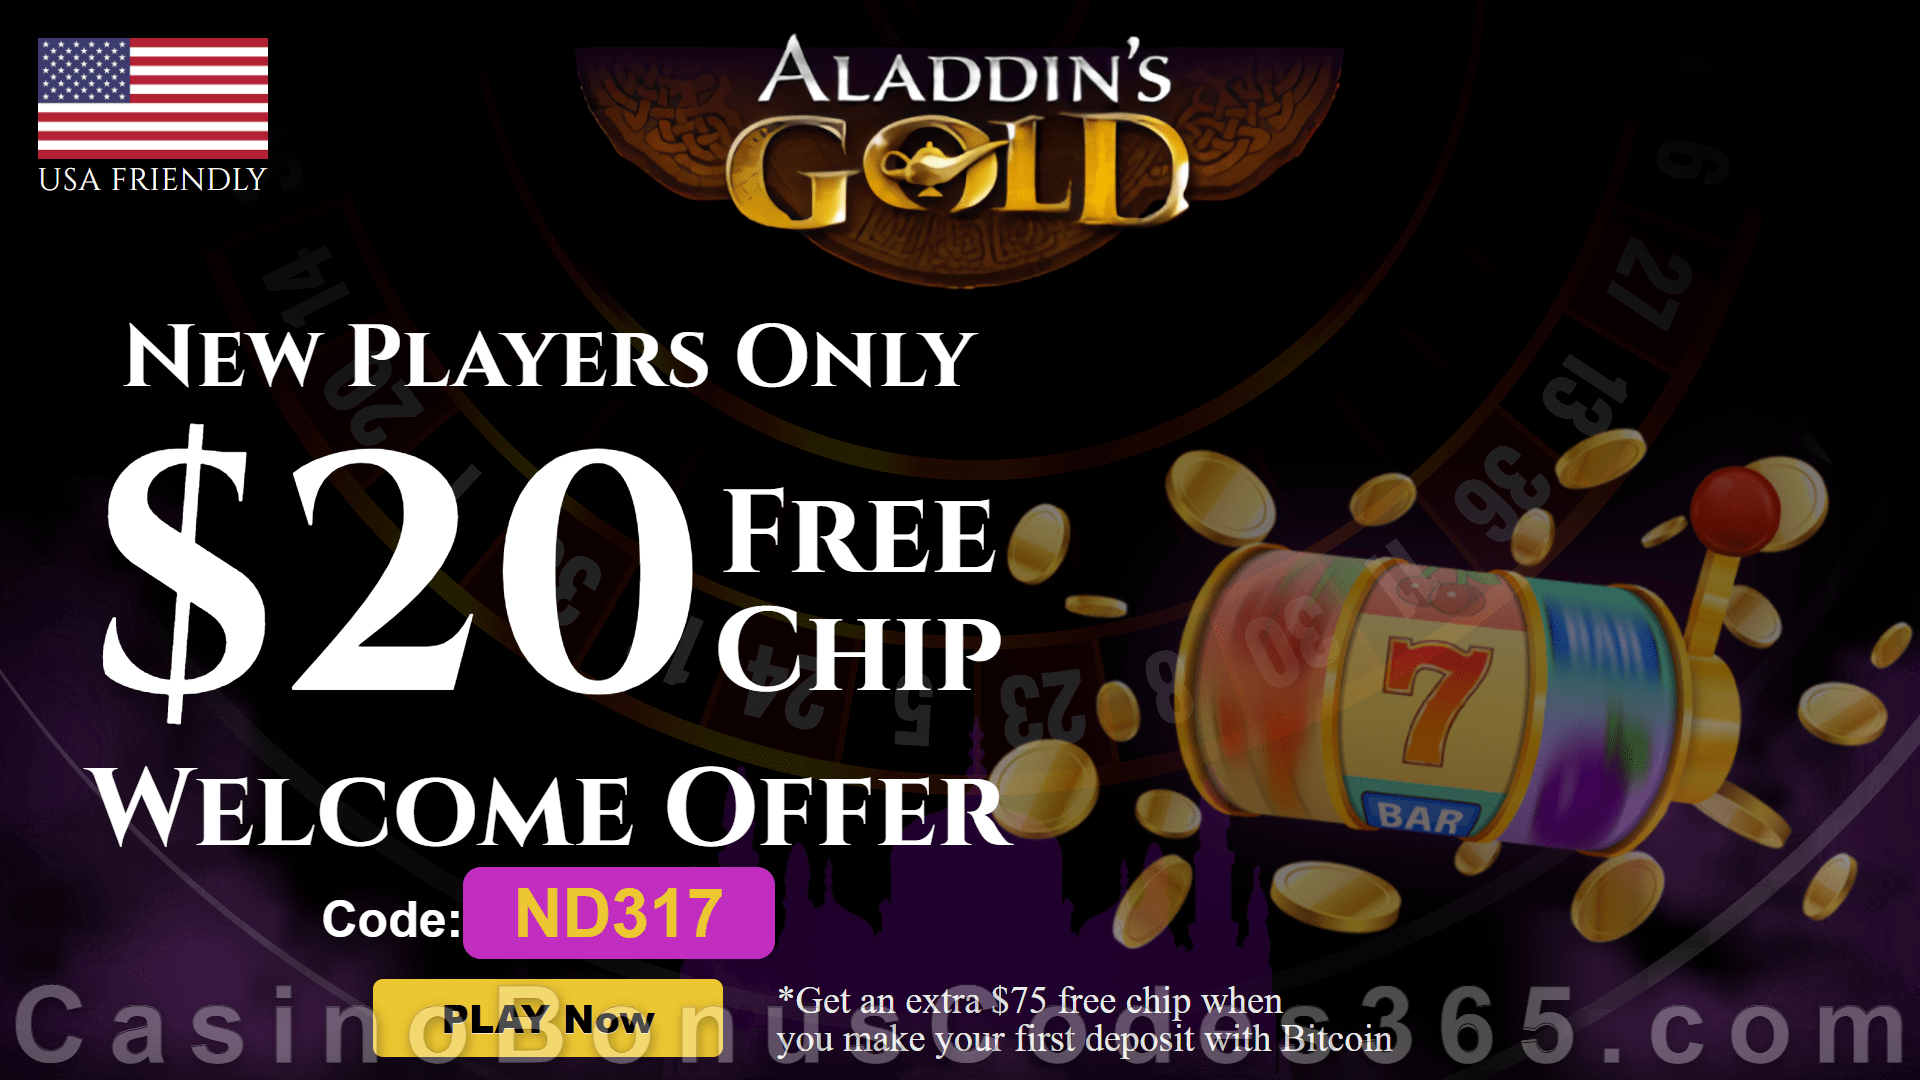 Aladdins Gold Casino Review And Bonus Codes